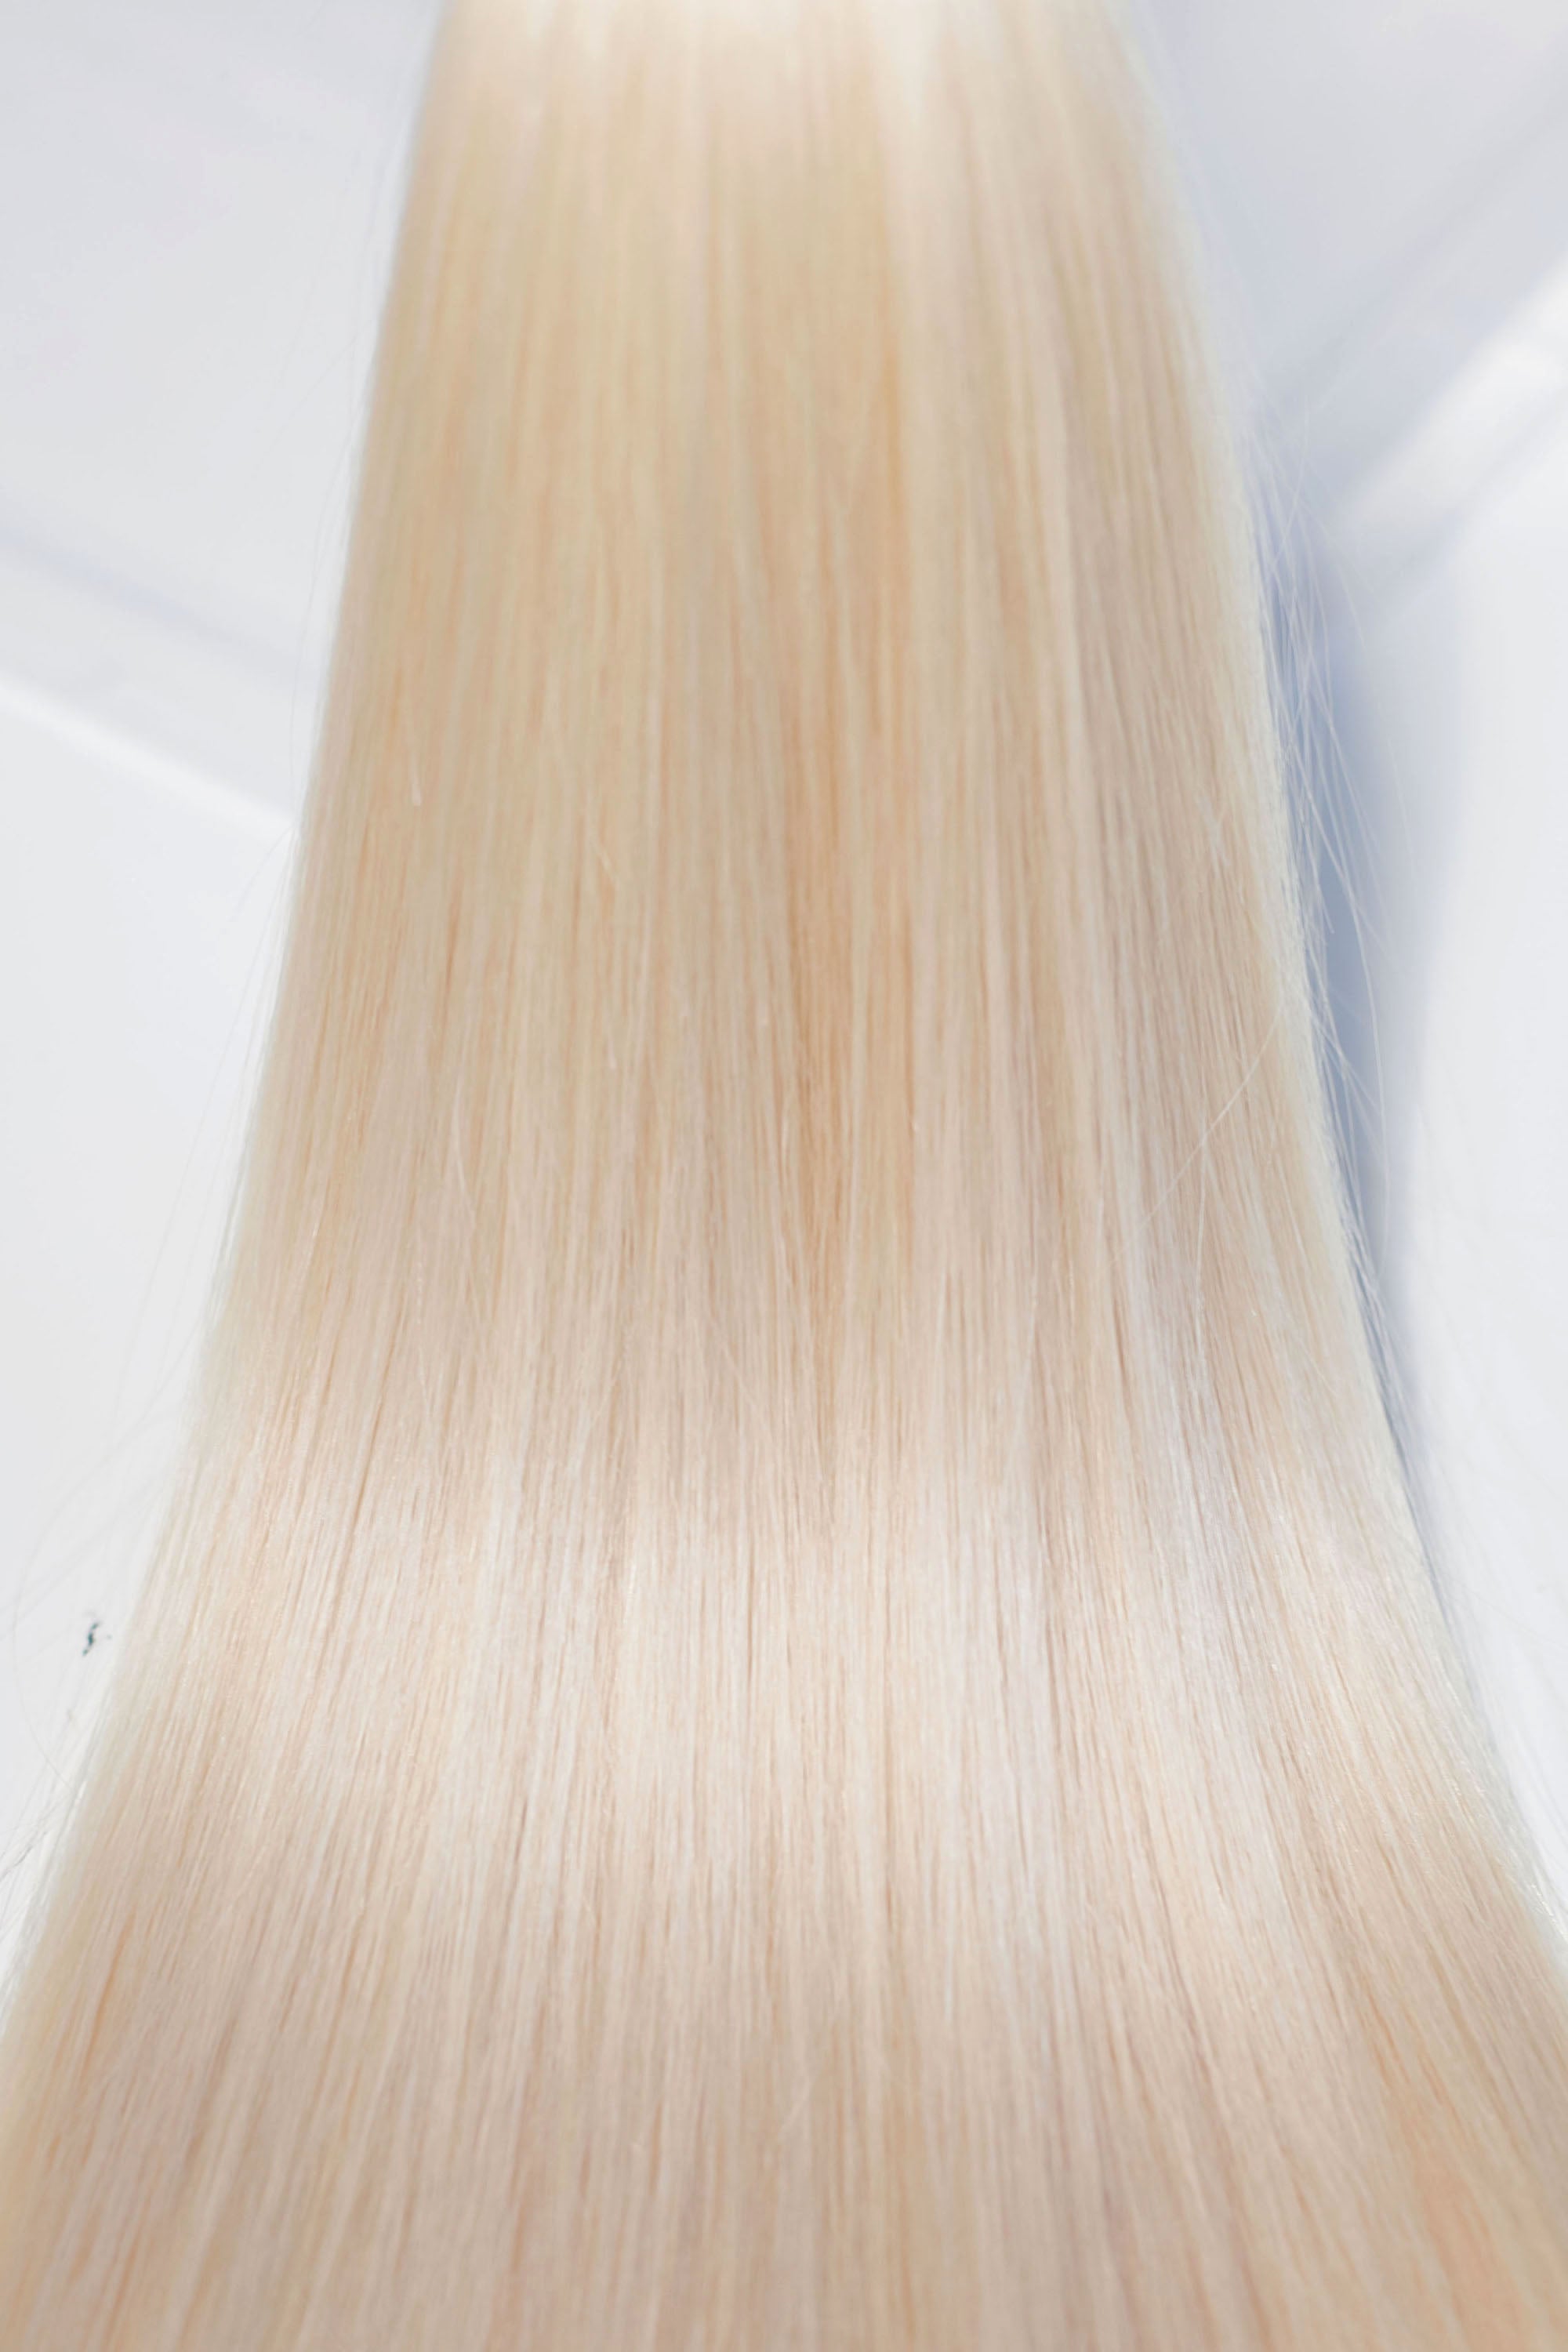 Behair professional Bulk hair "Premium" 24" (60cm) Natural Straight Ice Blond #000 - 25g hair extensions